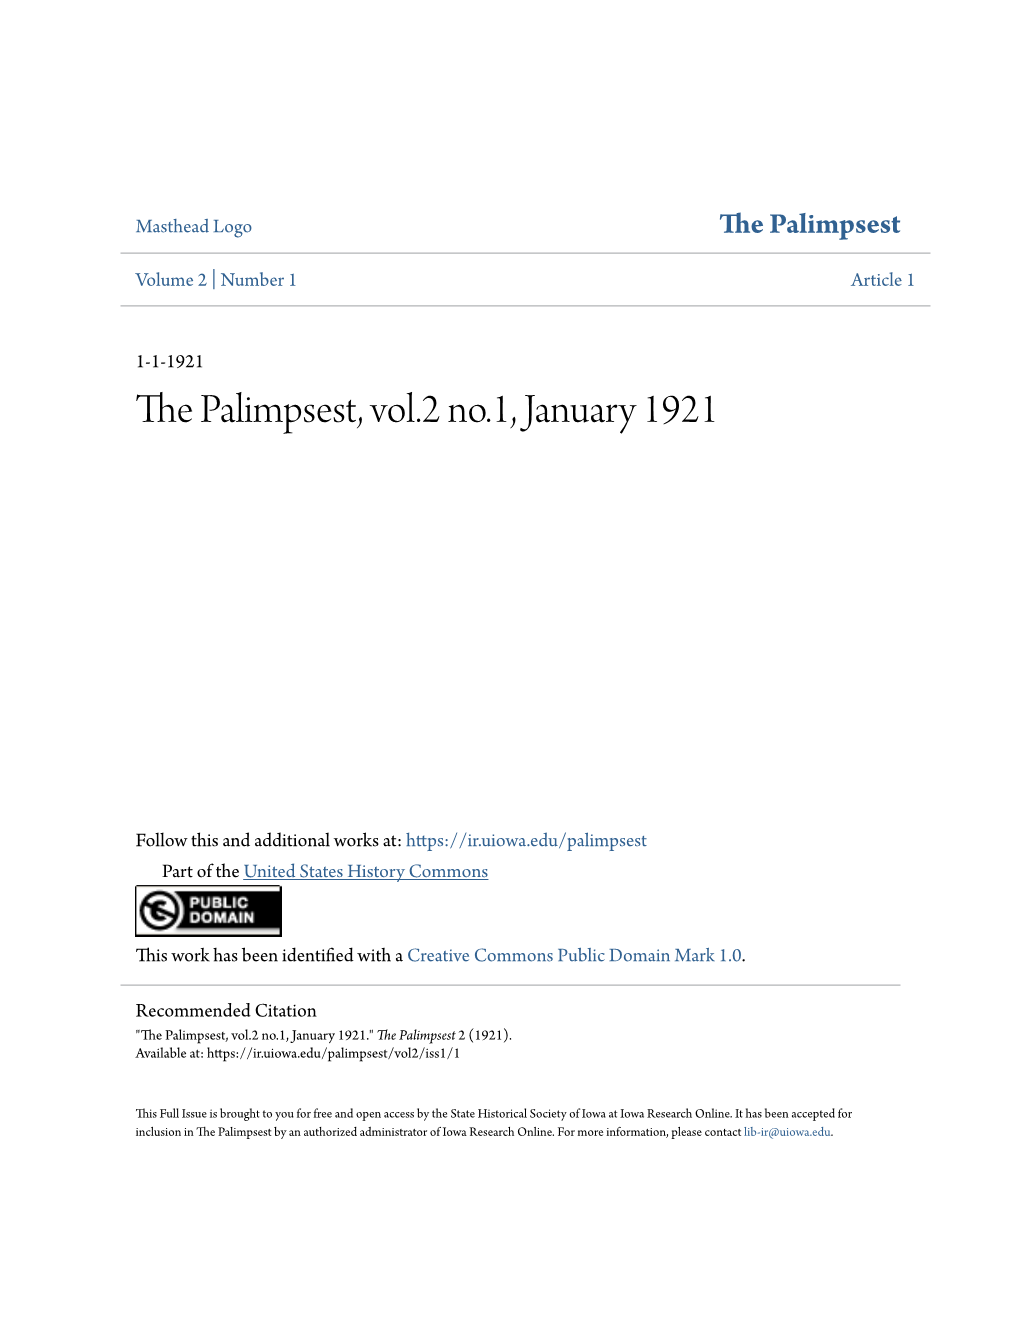 The Palimpsest, Vol.2 No.1, January 1921